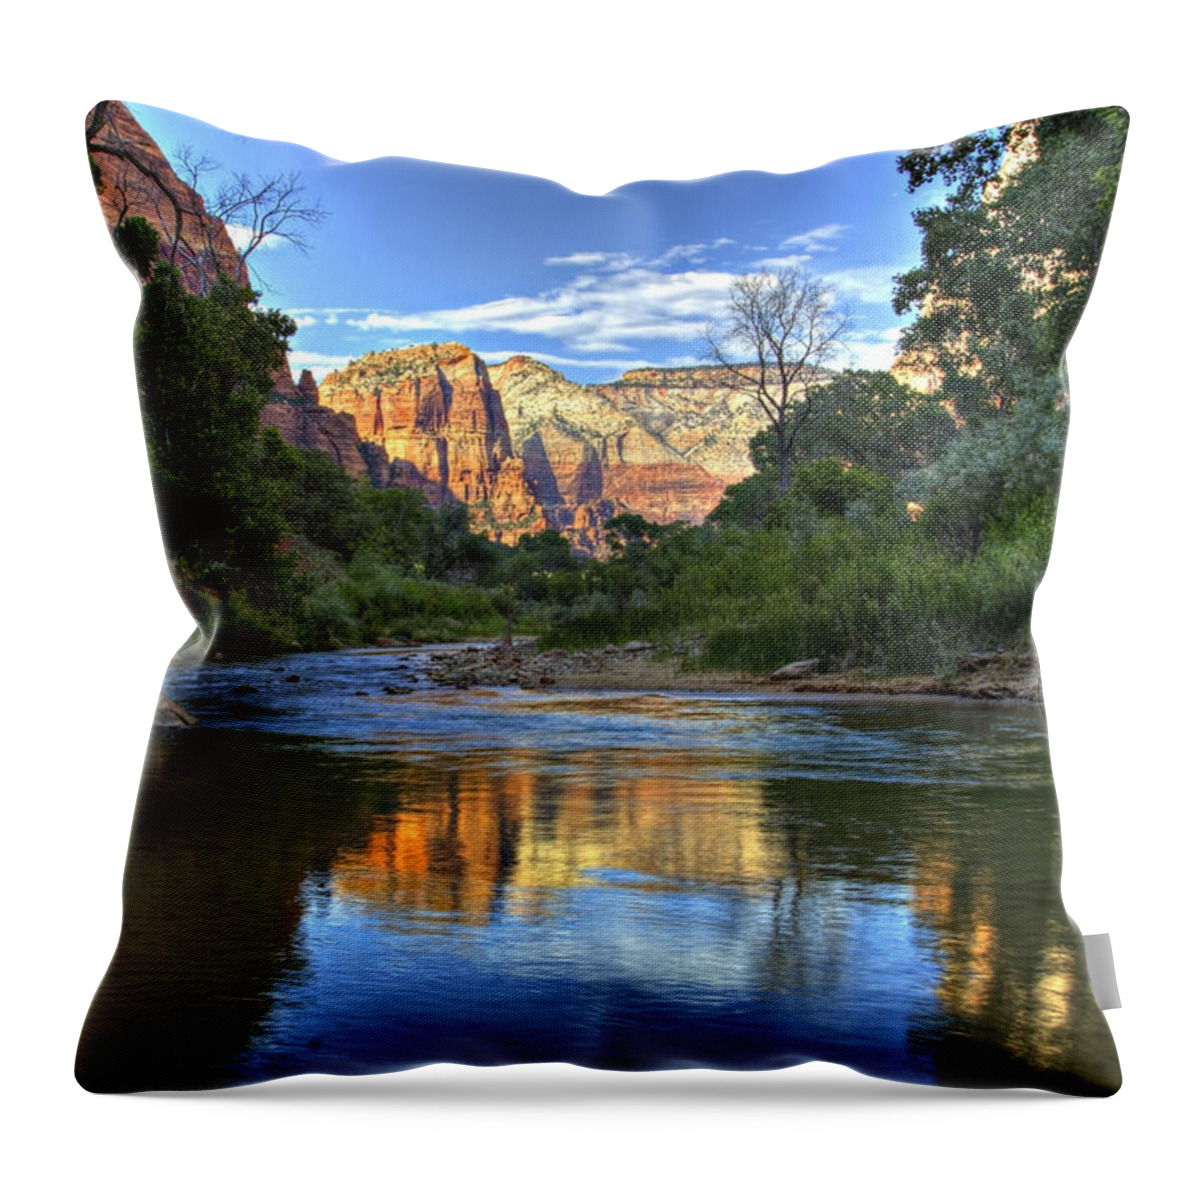 Utah Throw Pillow featuring the photograph Virgin River by Peter Kennett